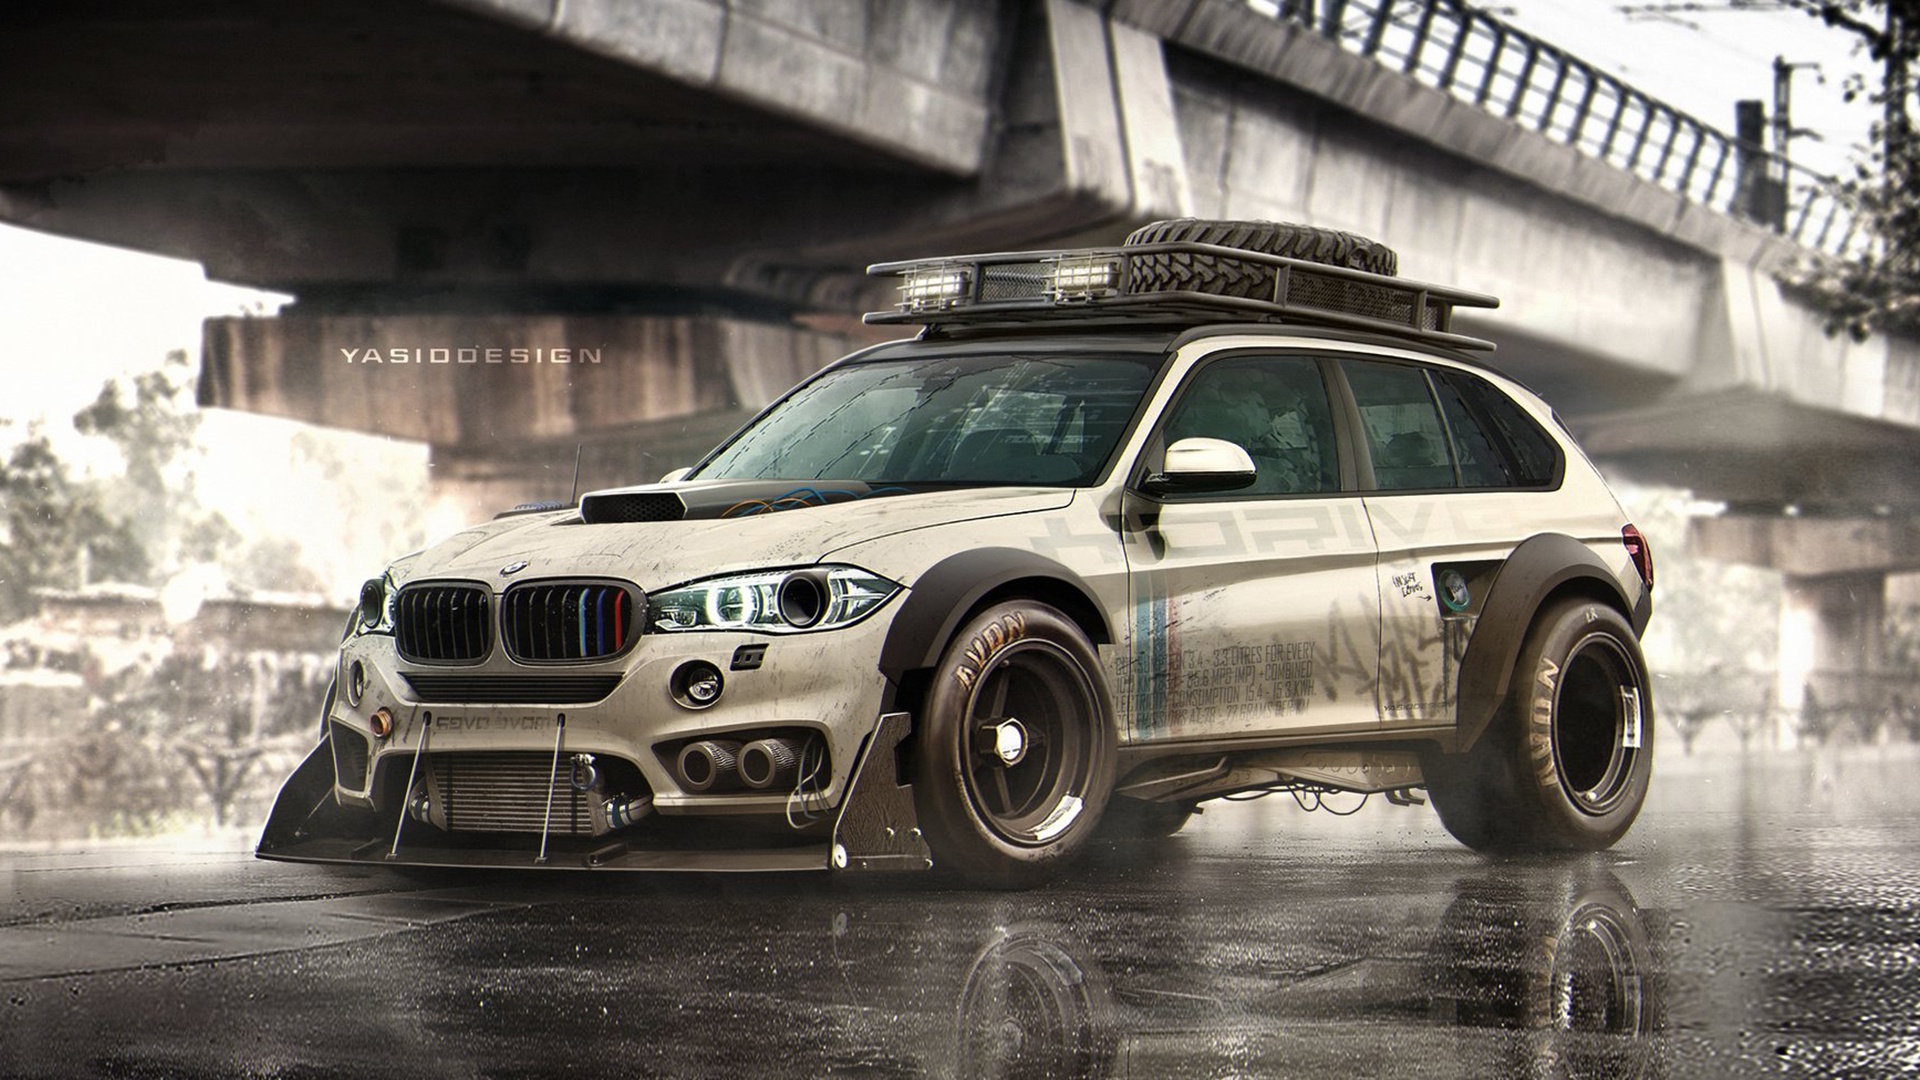 Bmw x5 привод. BMW x5 e90. BMW x5 Drift. BMW x5m арт. BMW x5 Offroad.